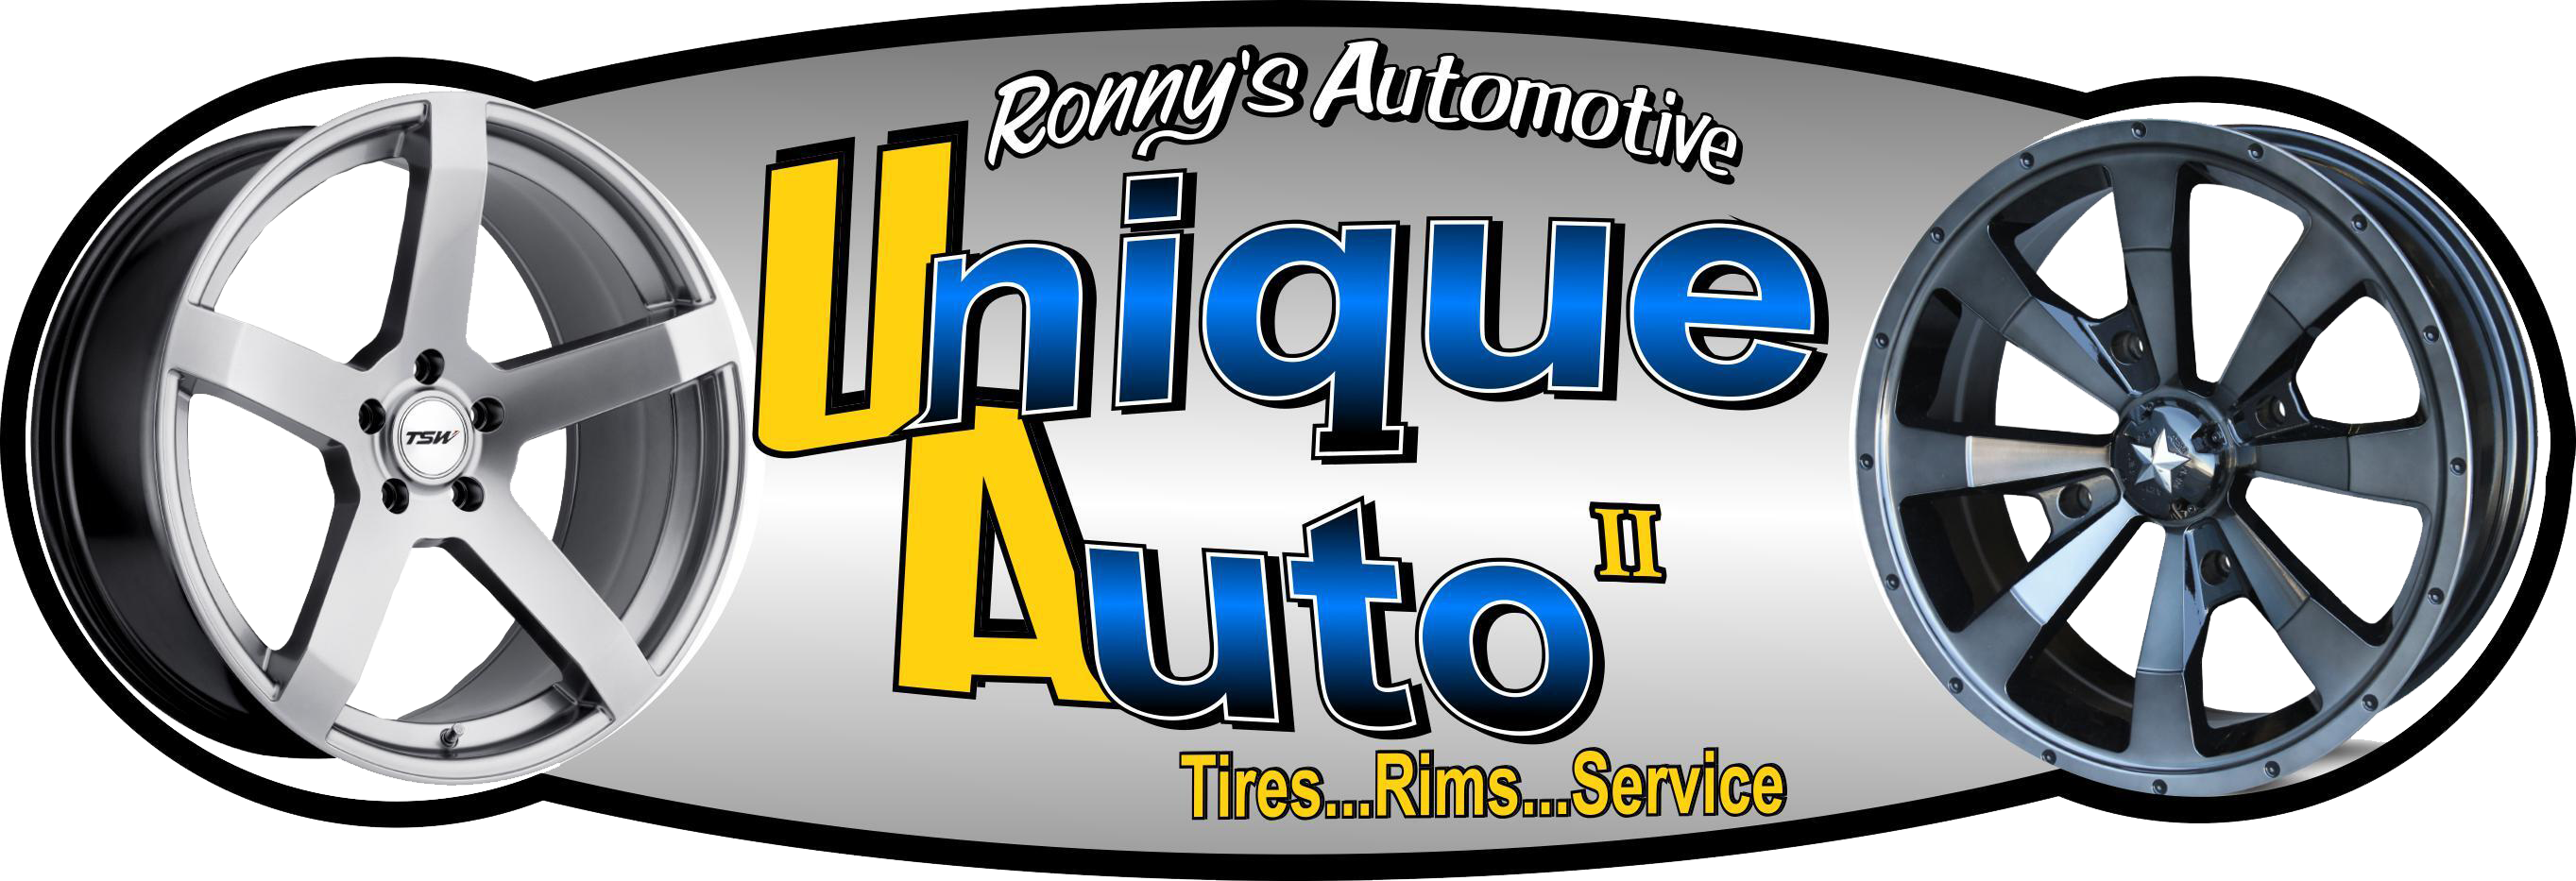 Welcome to Ronny's Unique Auto II